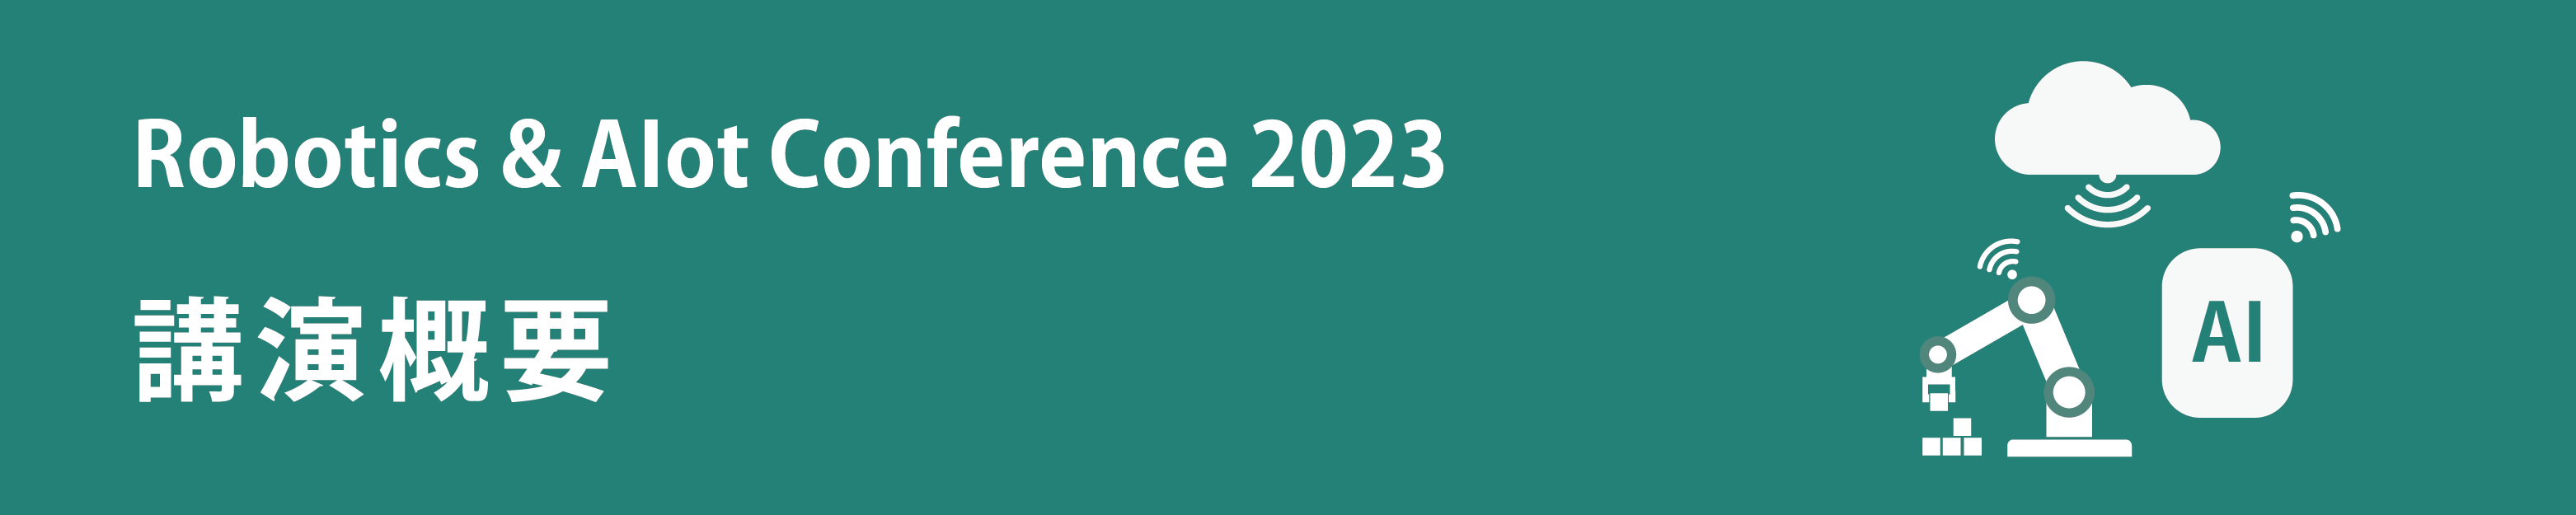 Robotics & AIoT Conference 2023講演概要のアイキャッチ画像